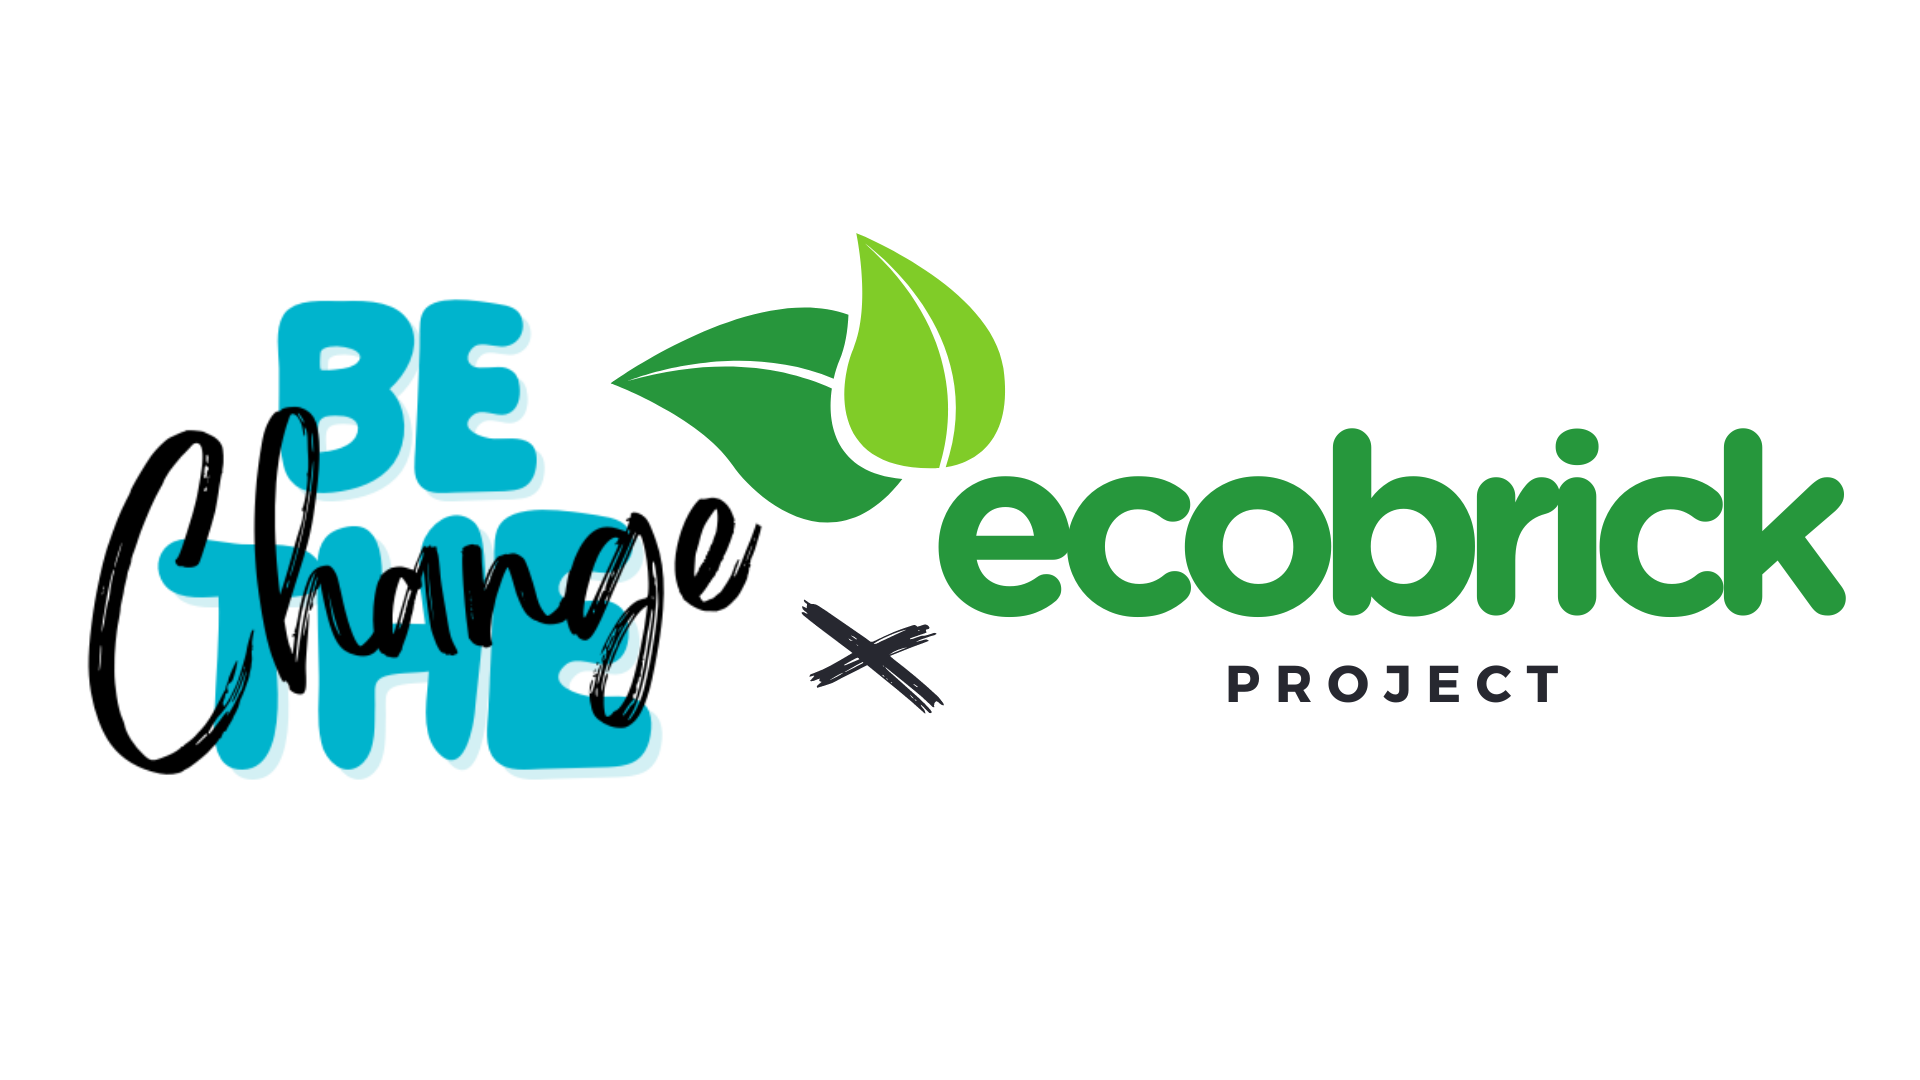 EcoBrick